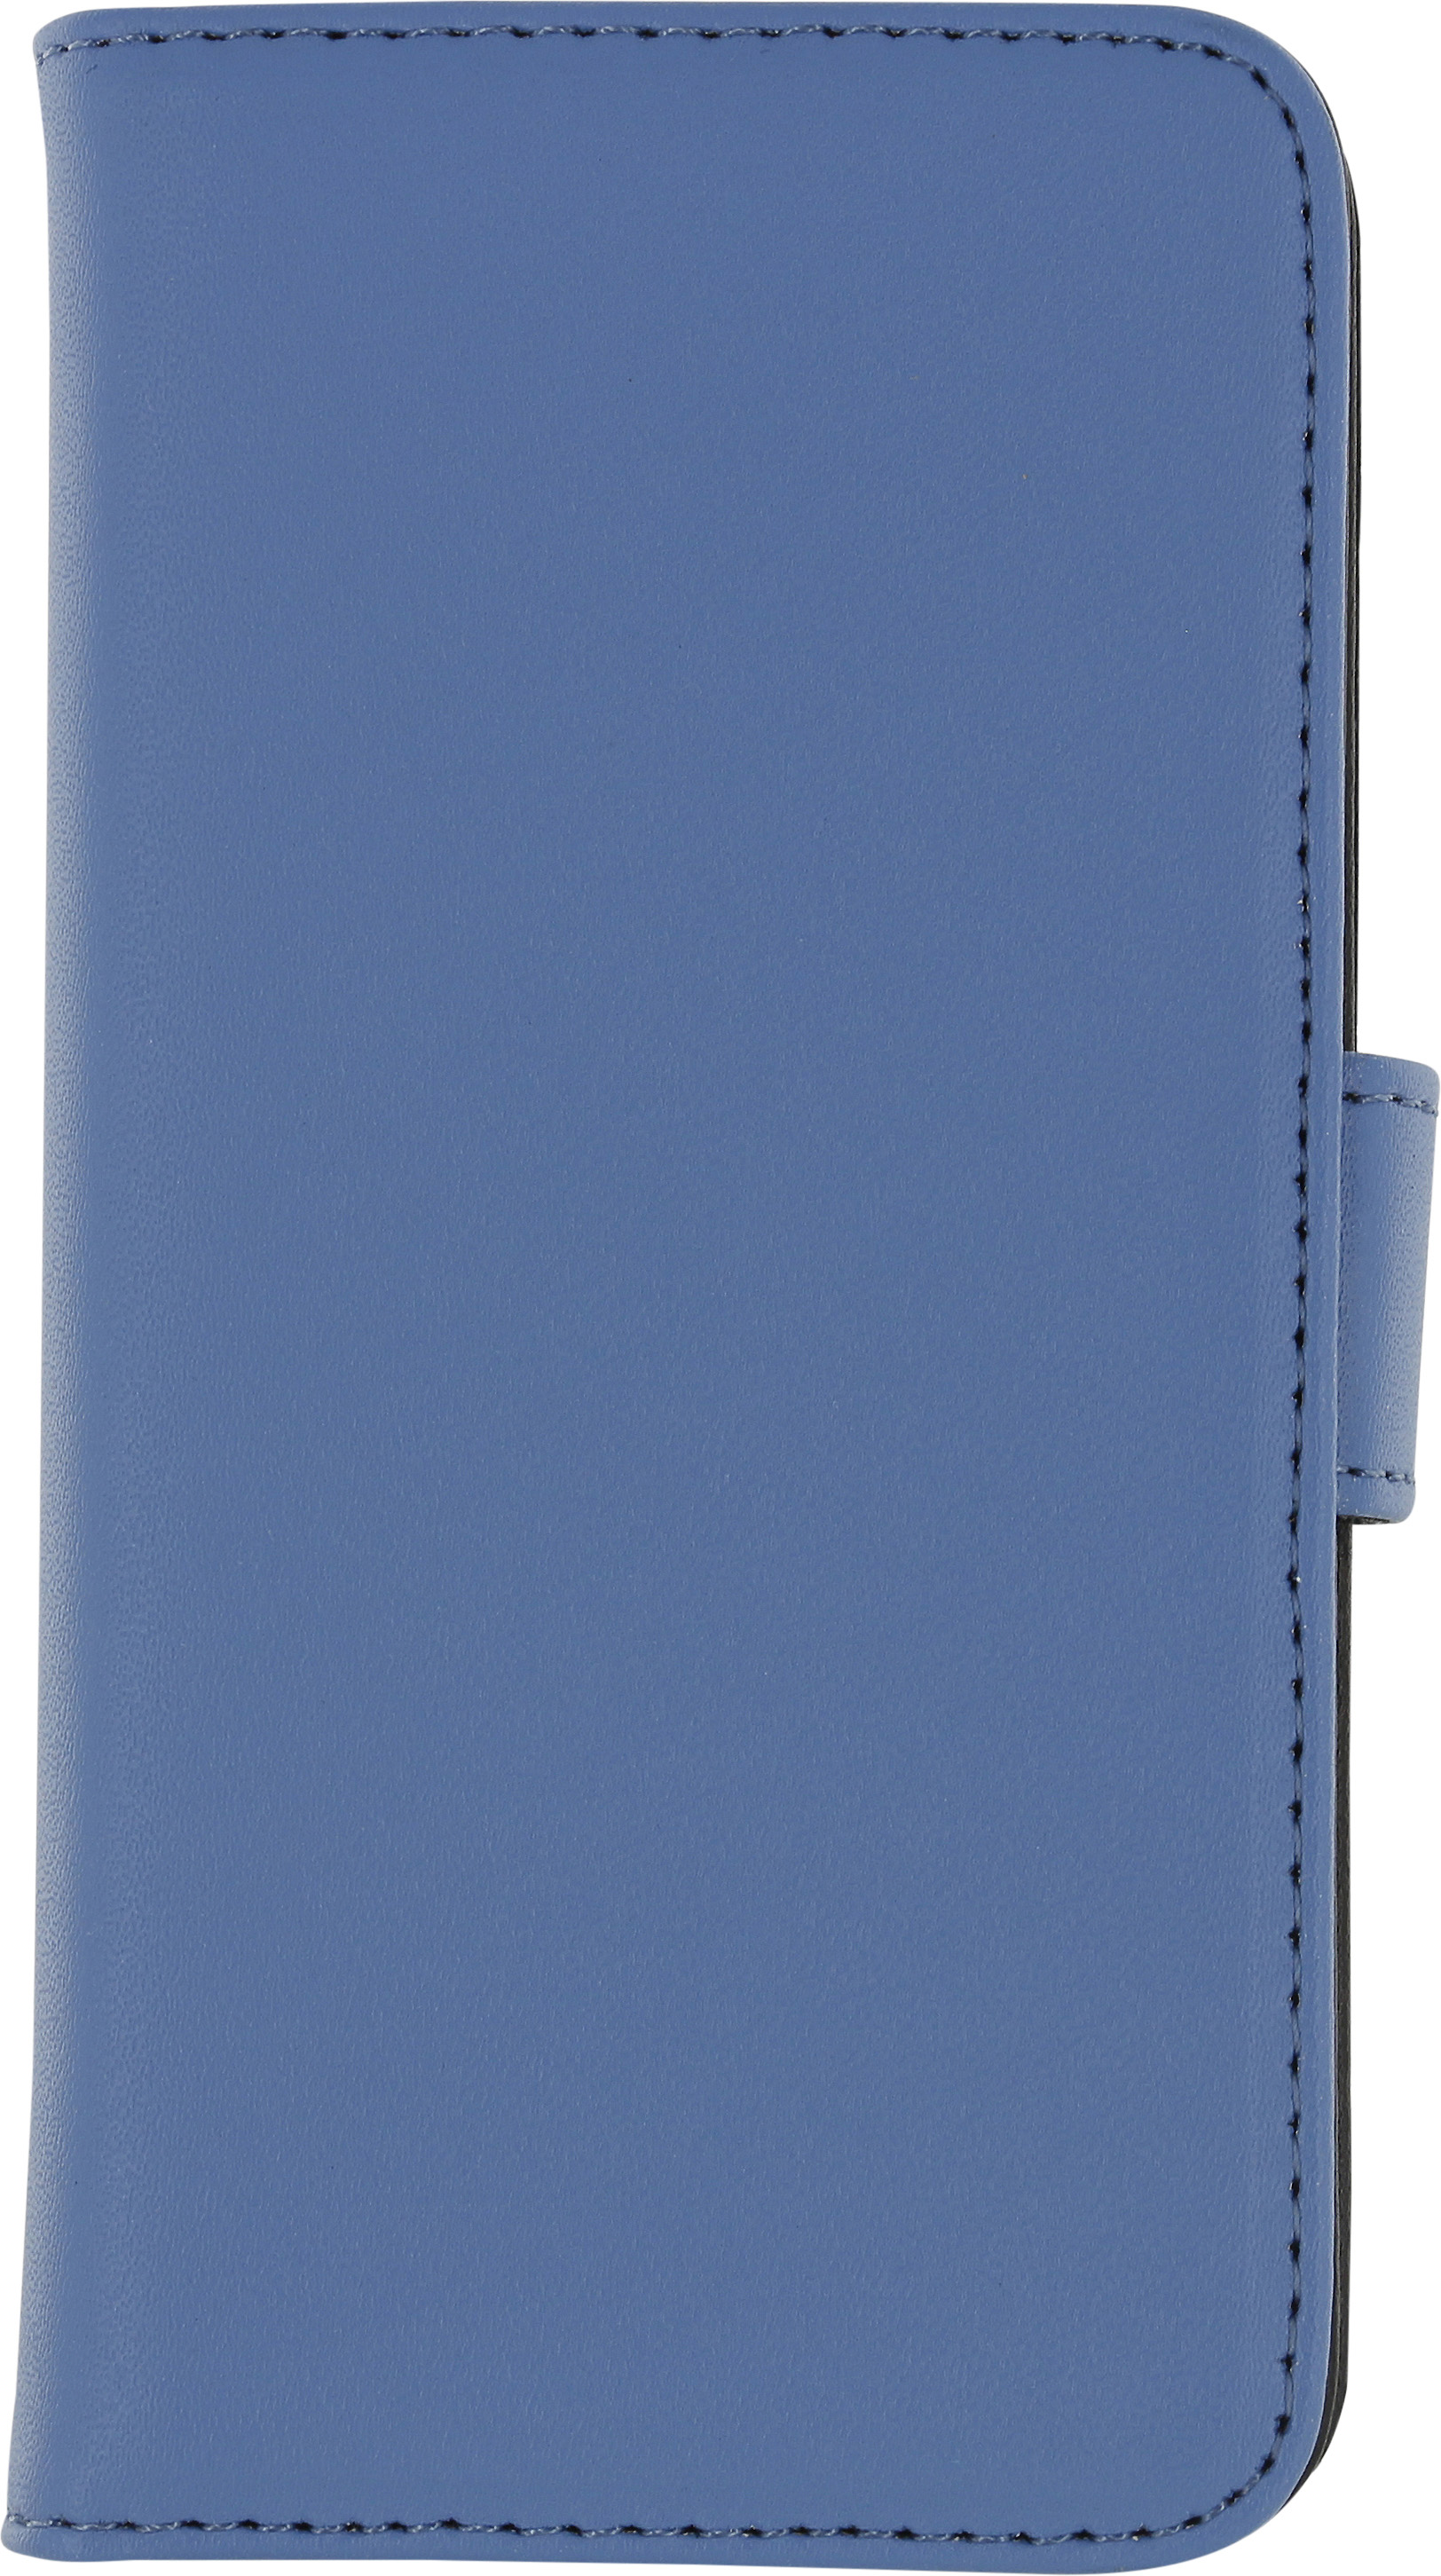 iPhone 6s/6, wallet extended II, serenity, blauw